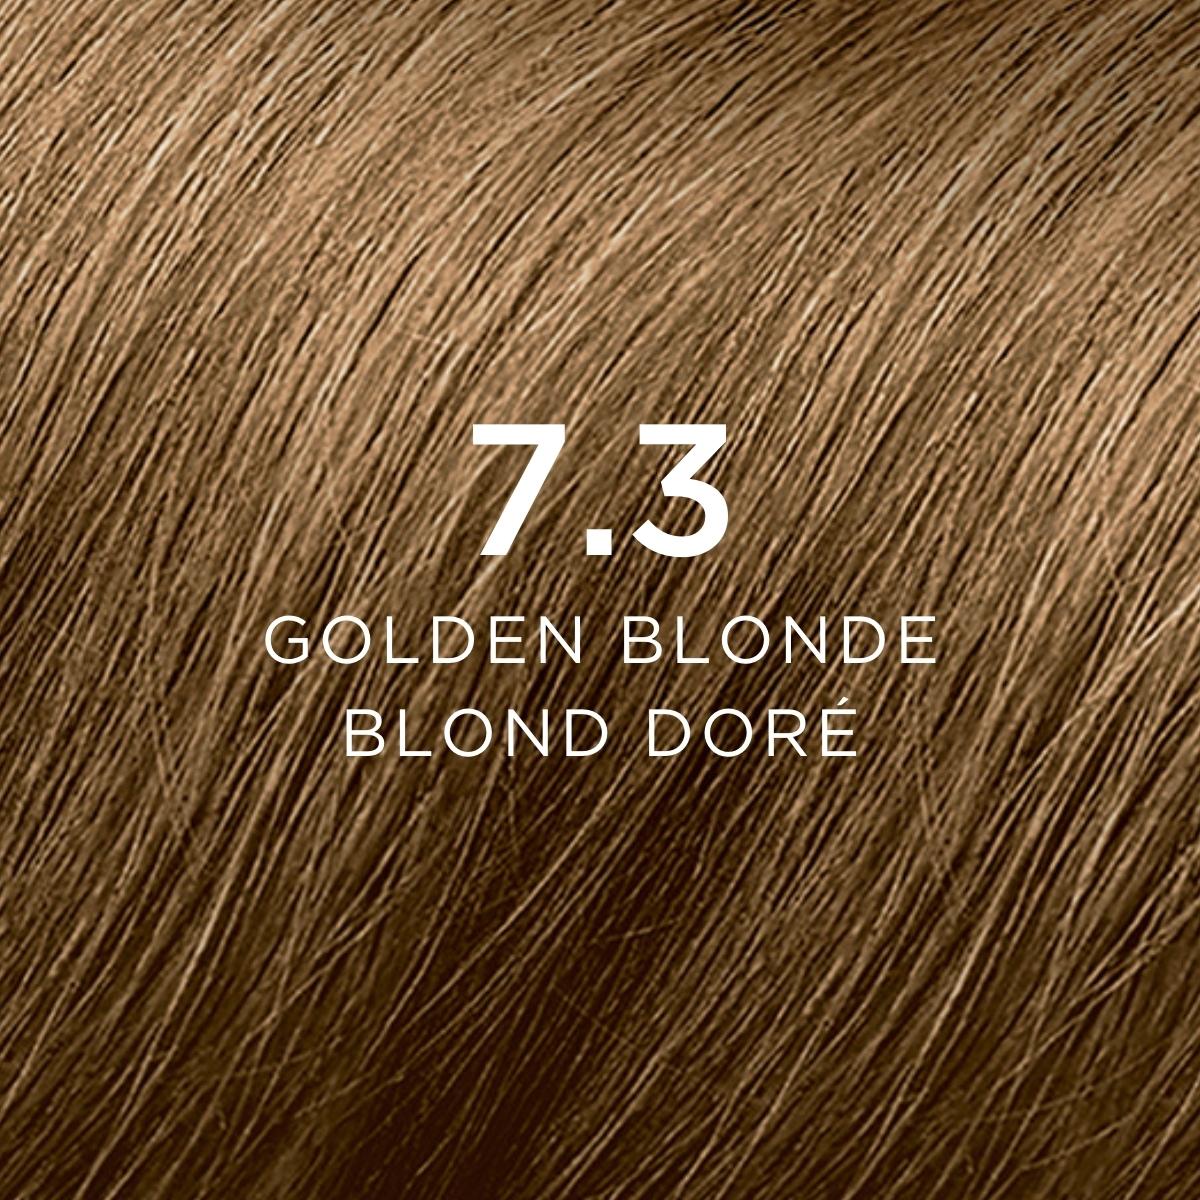 7.3 Blond Doré